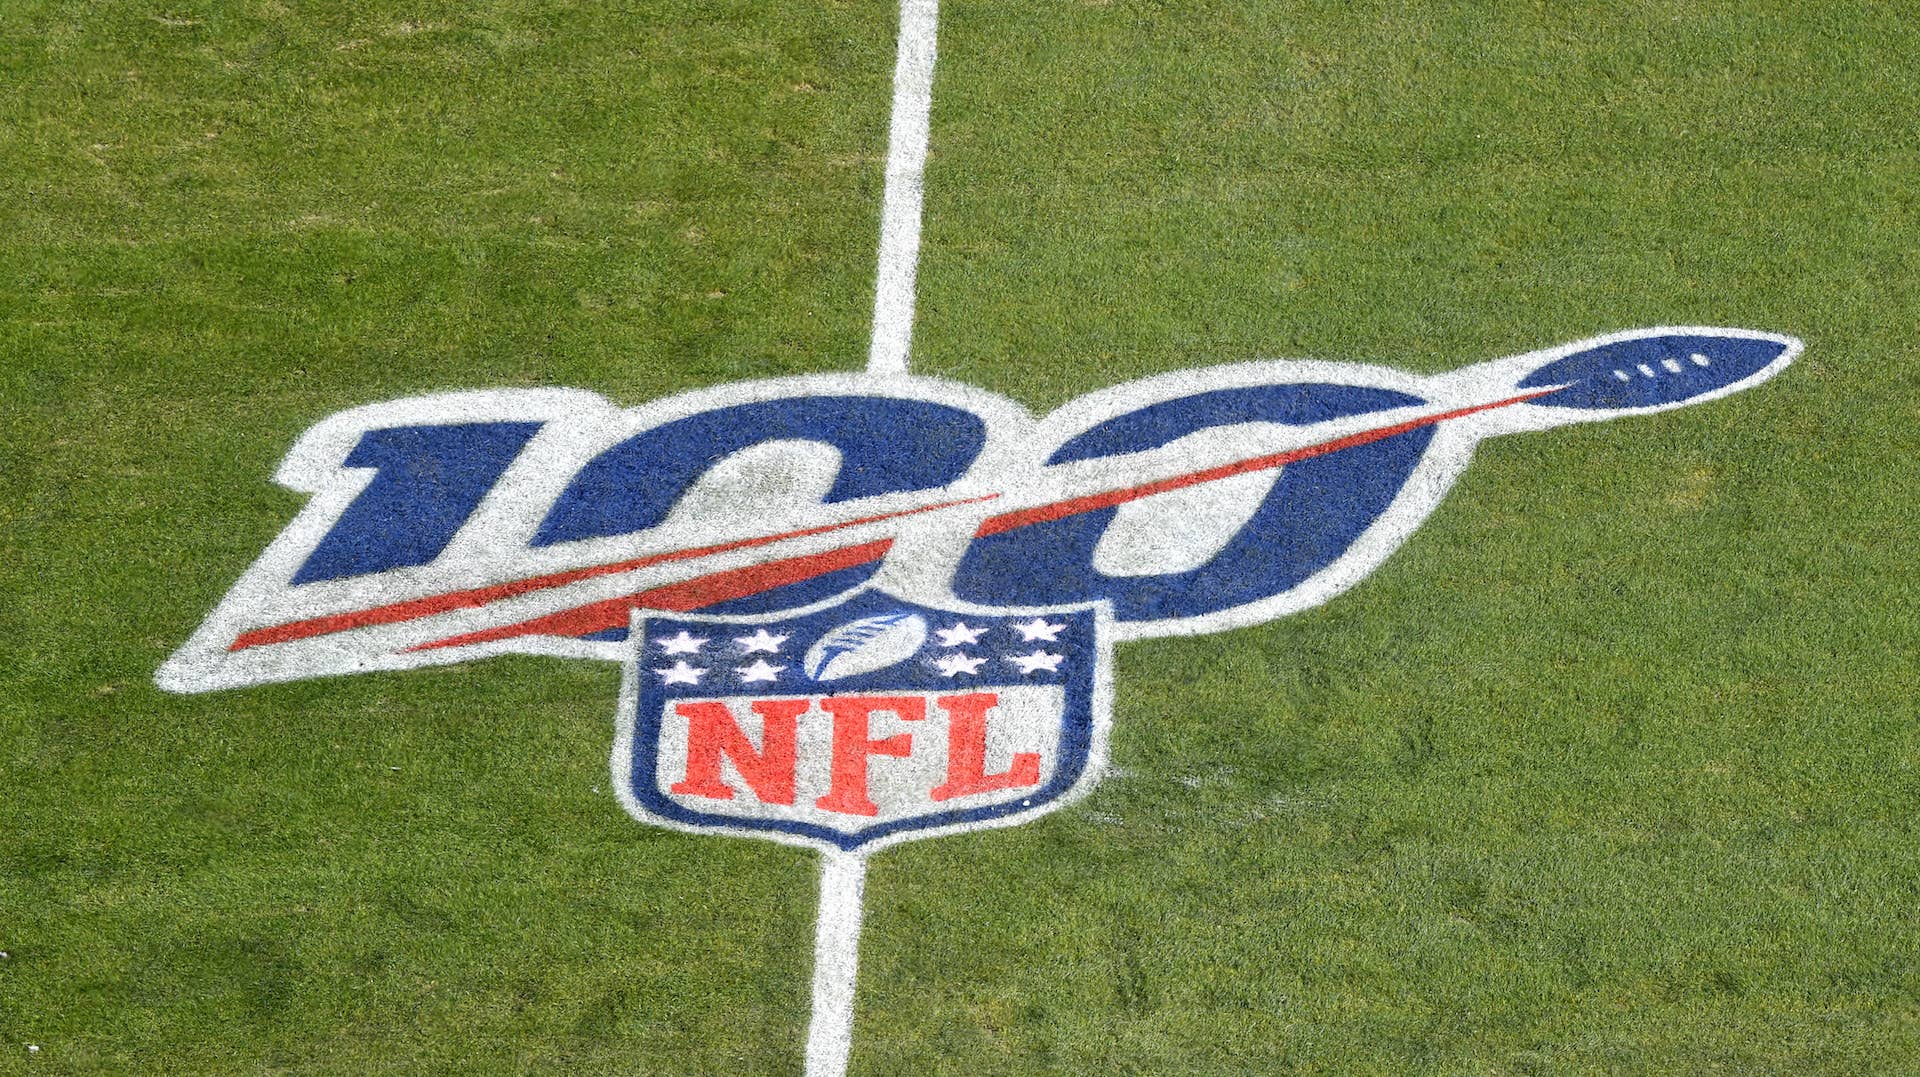 The NFL 100 year anniversary logo